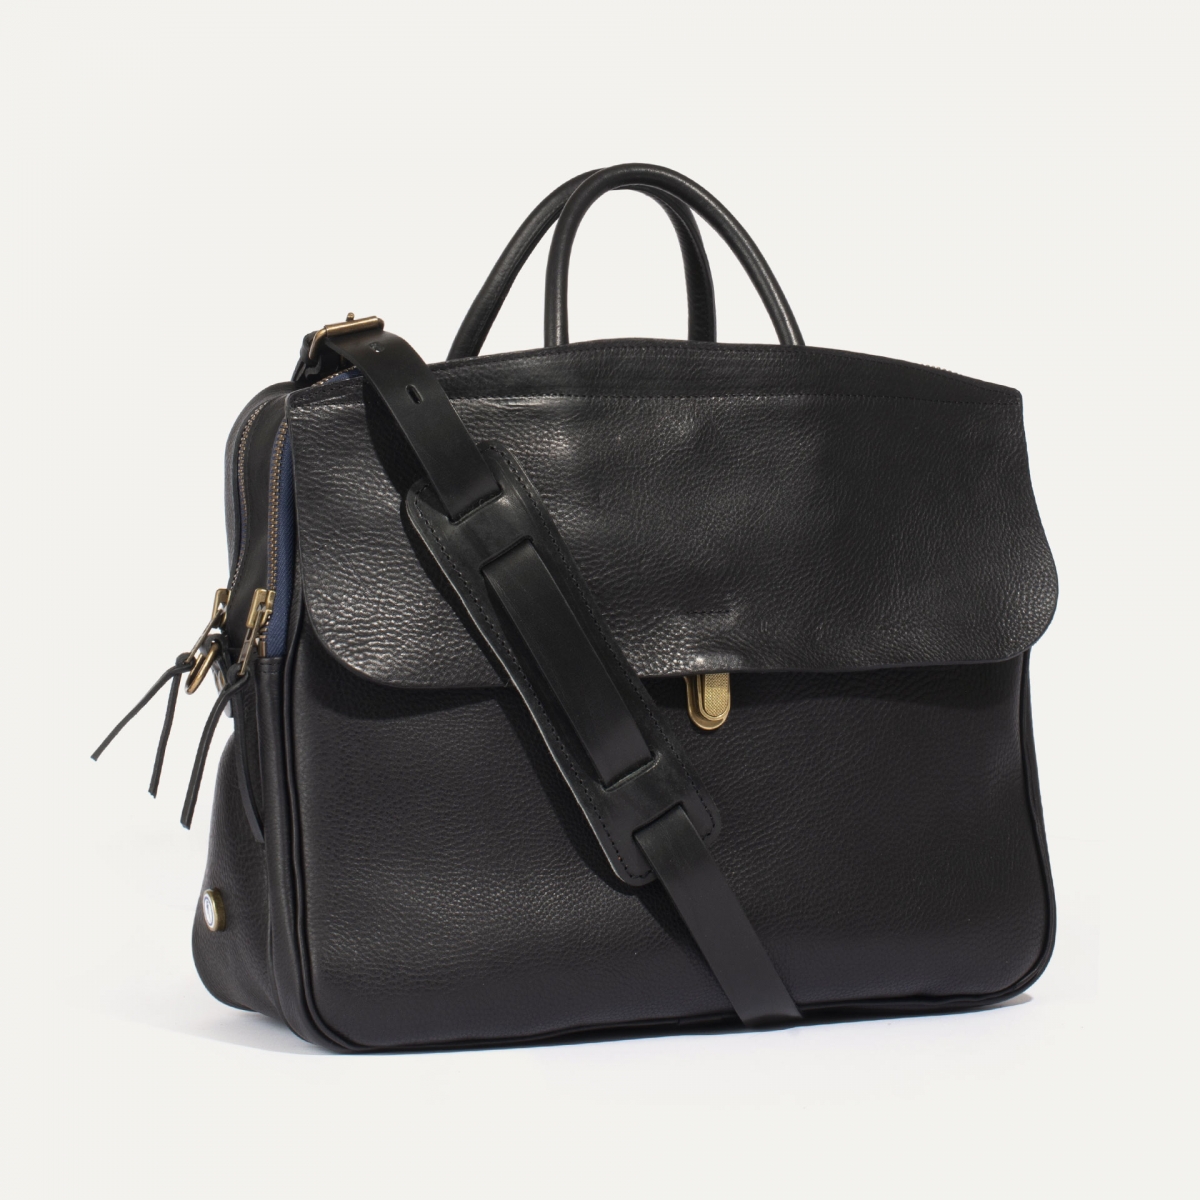 Zeppo Business bag - Black / E Pure (image n°1)